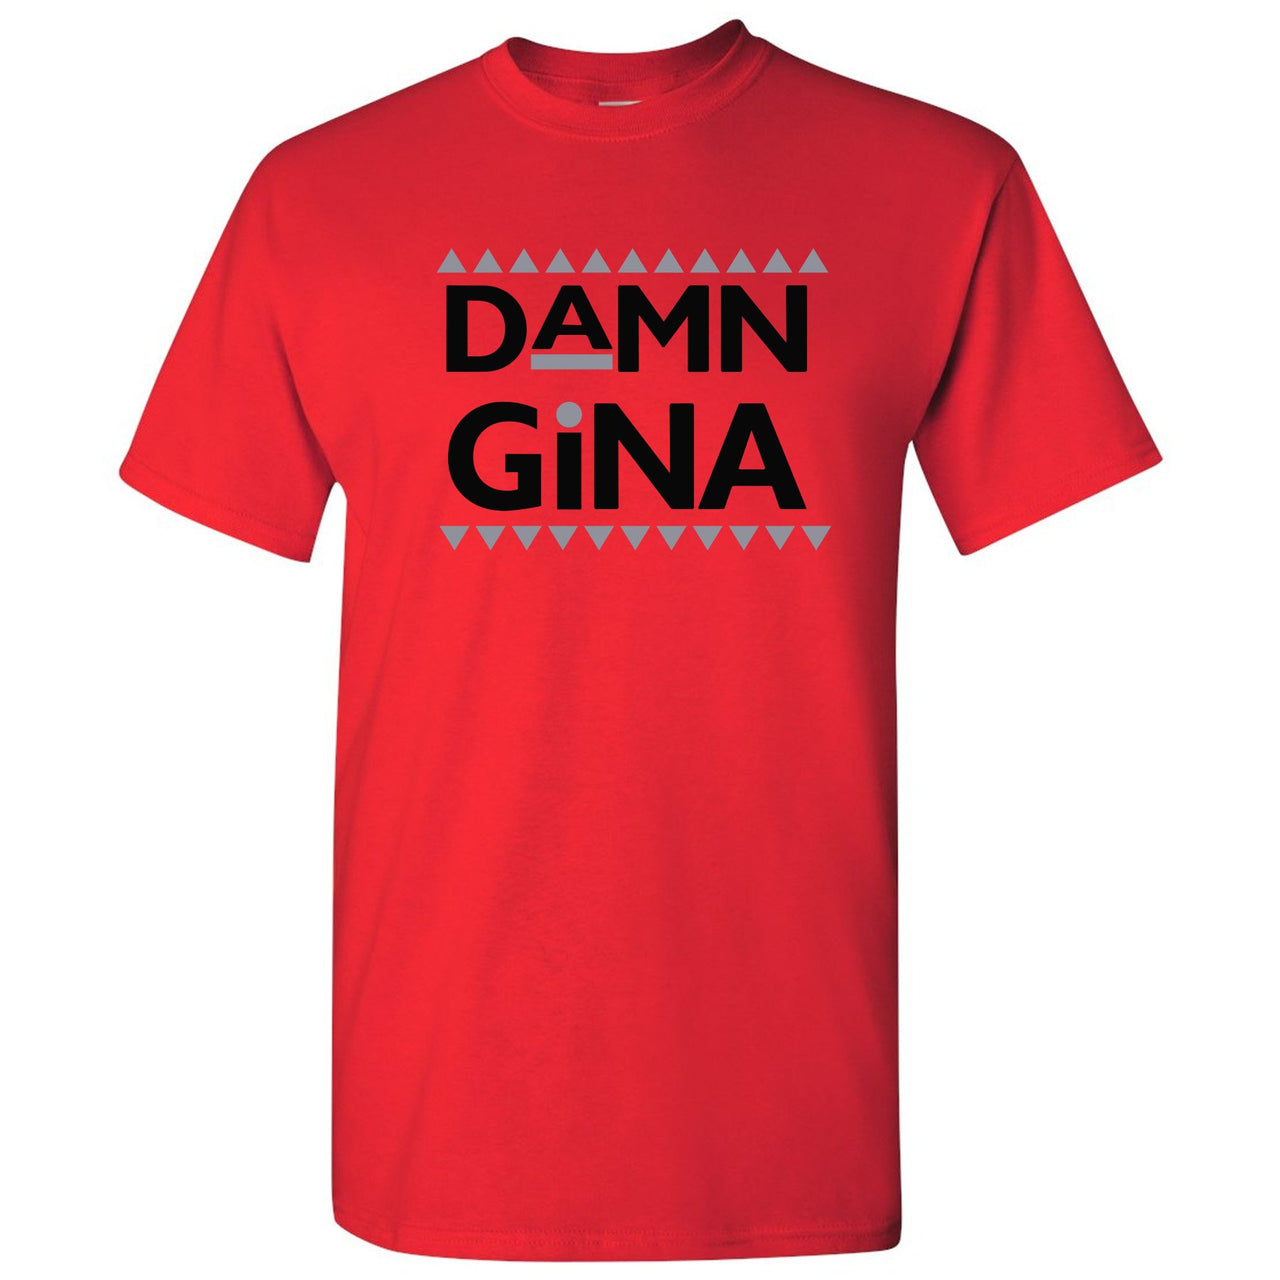 Bred 2019 4s T Shirt | Damn Gina, Red